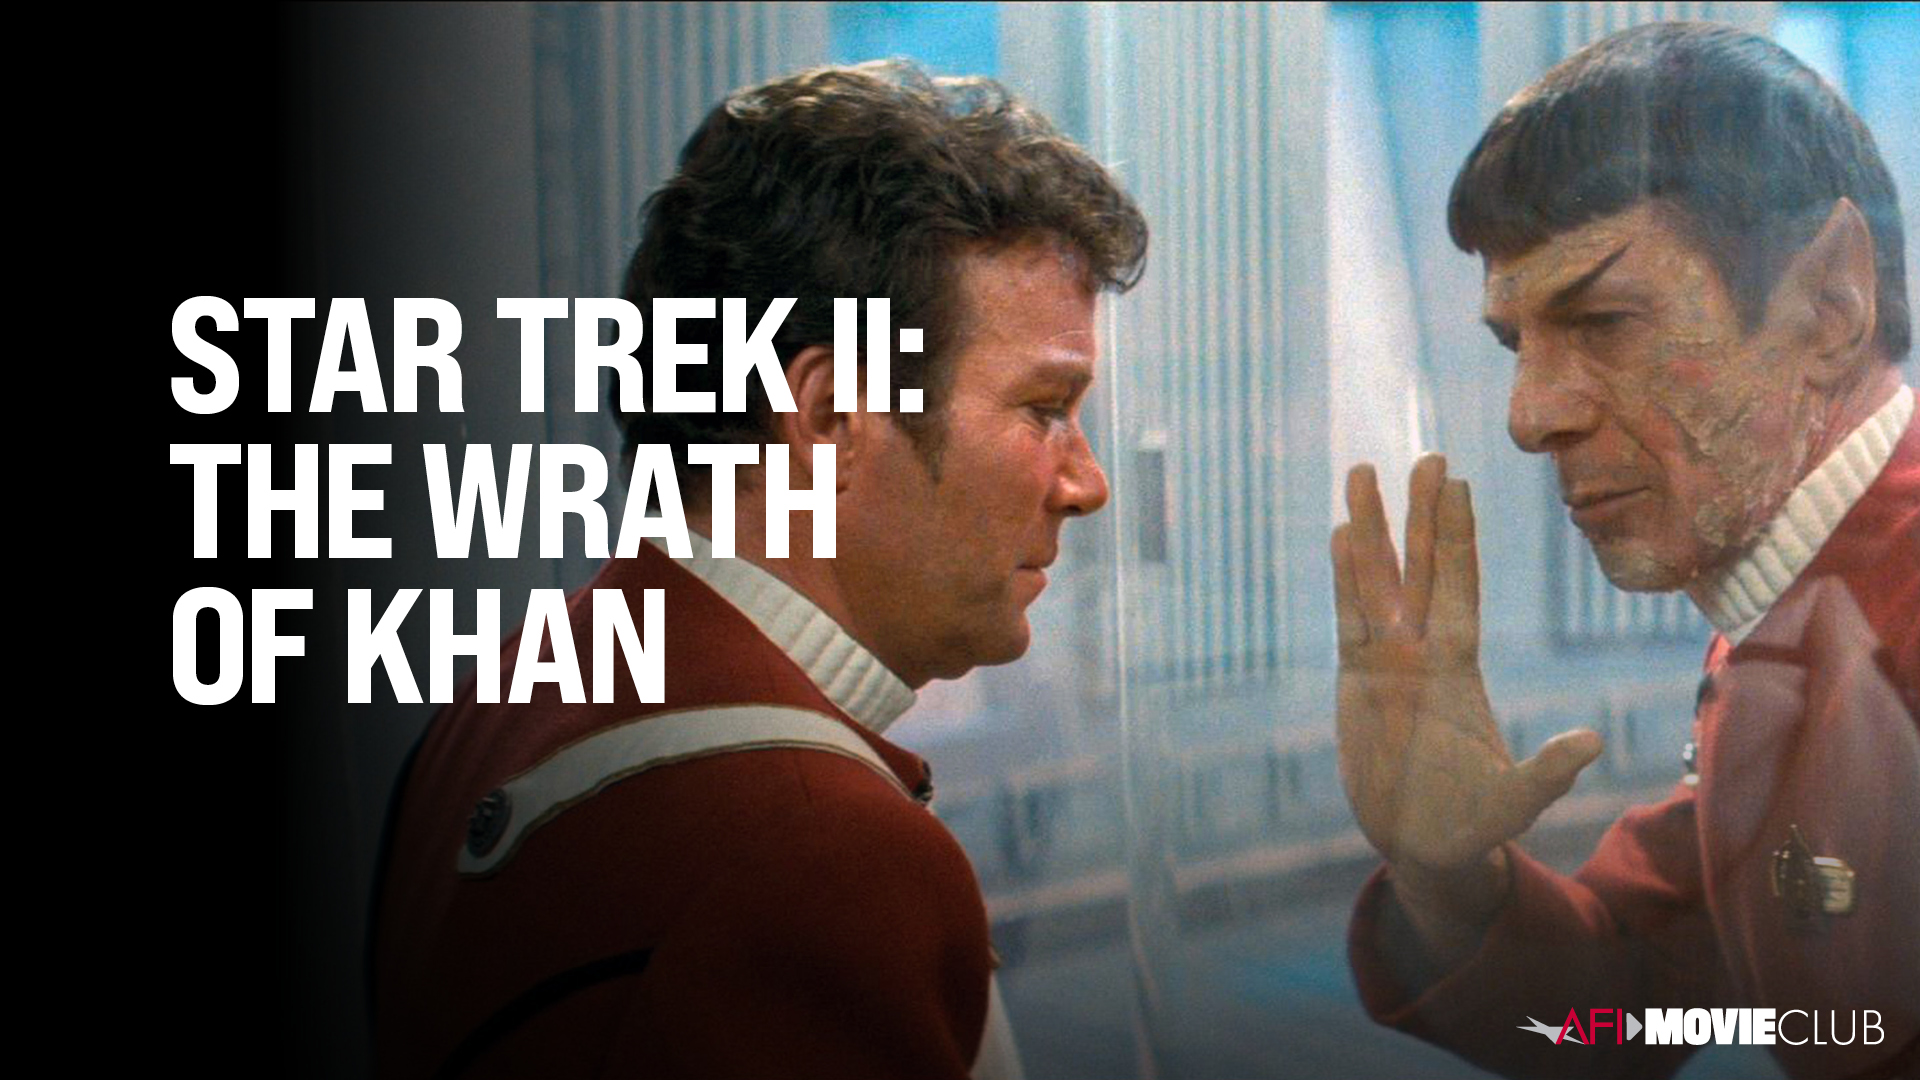 Star Trek II: The Wrath of Khan Film Still - Leonard Nimoy and William Shatner